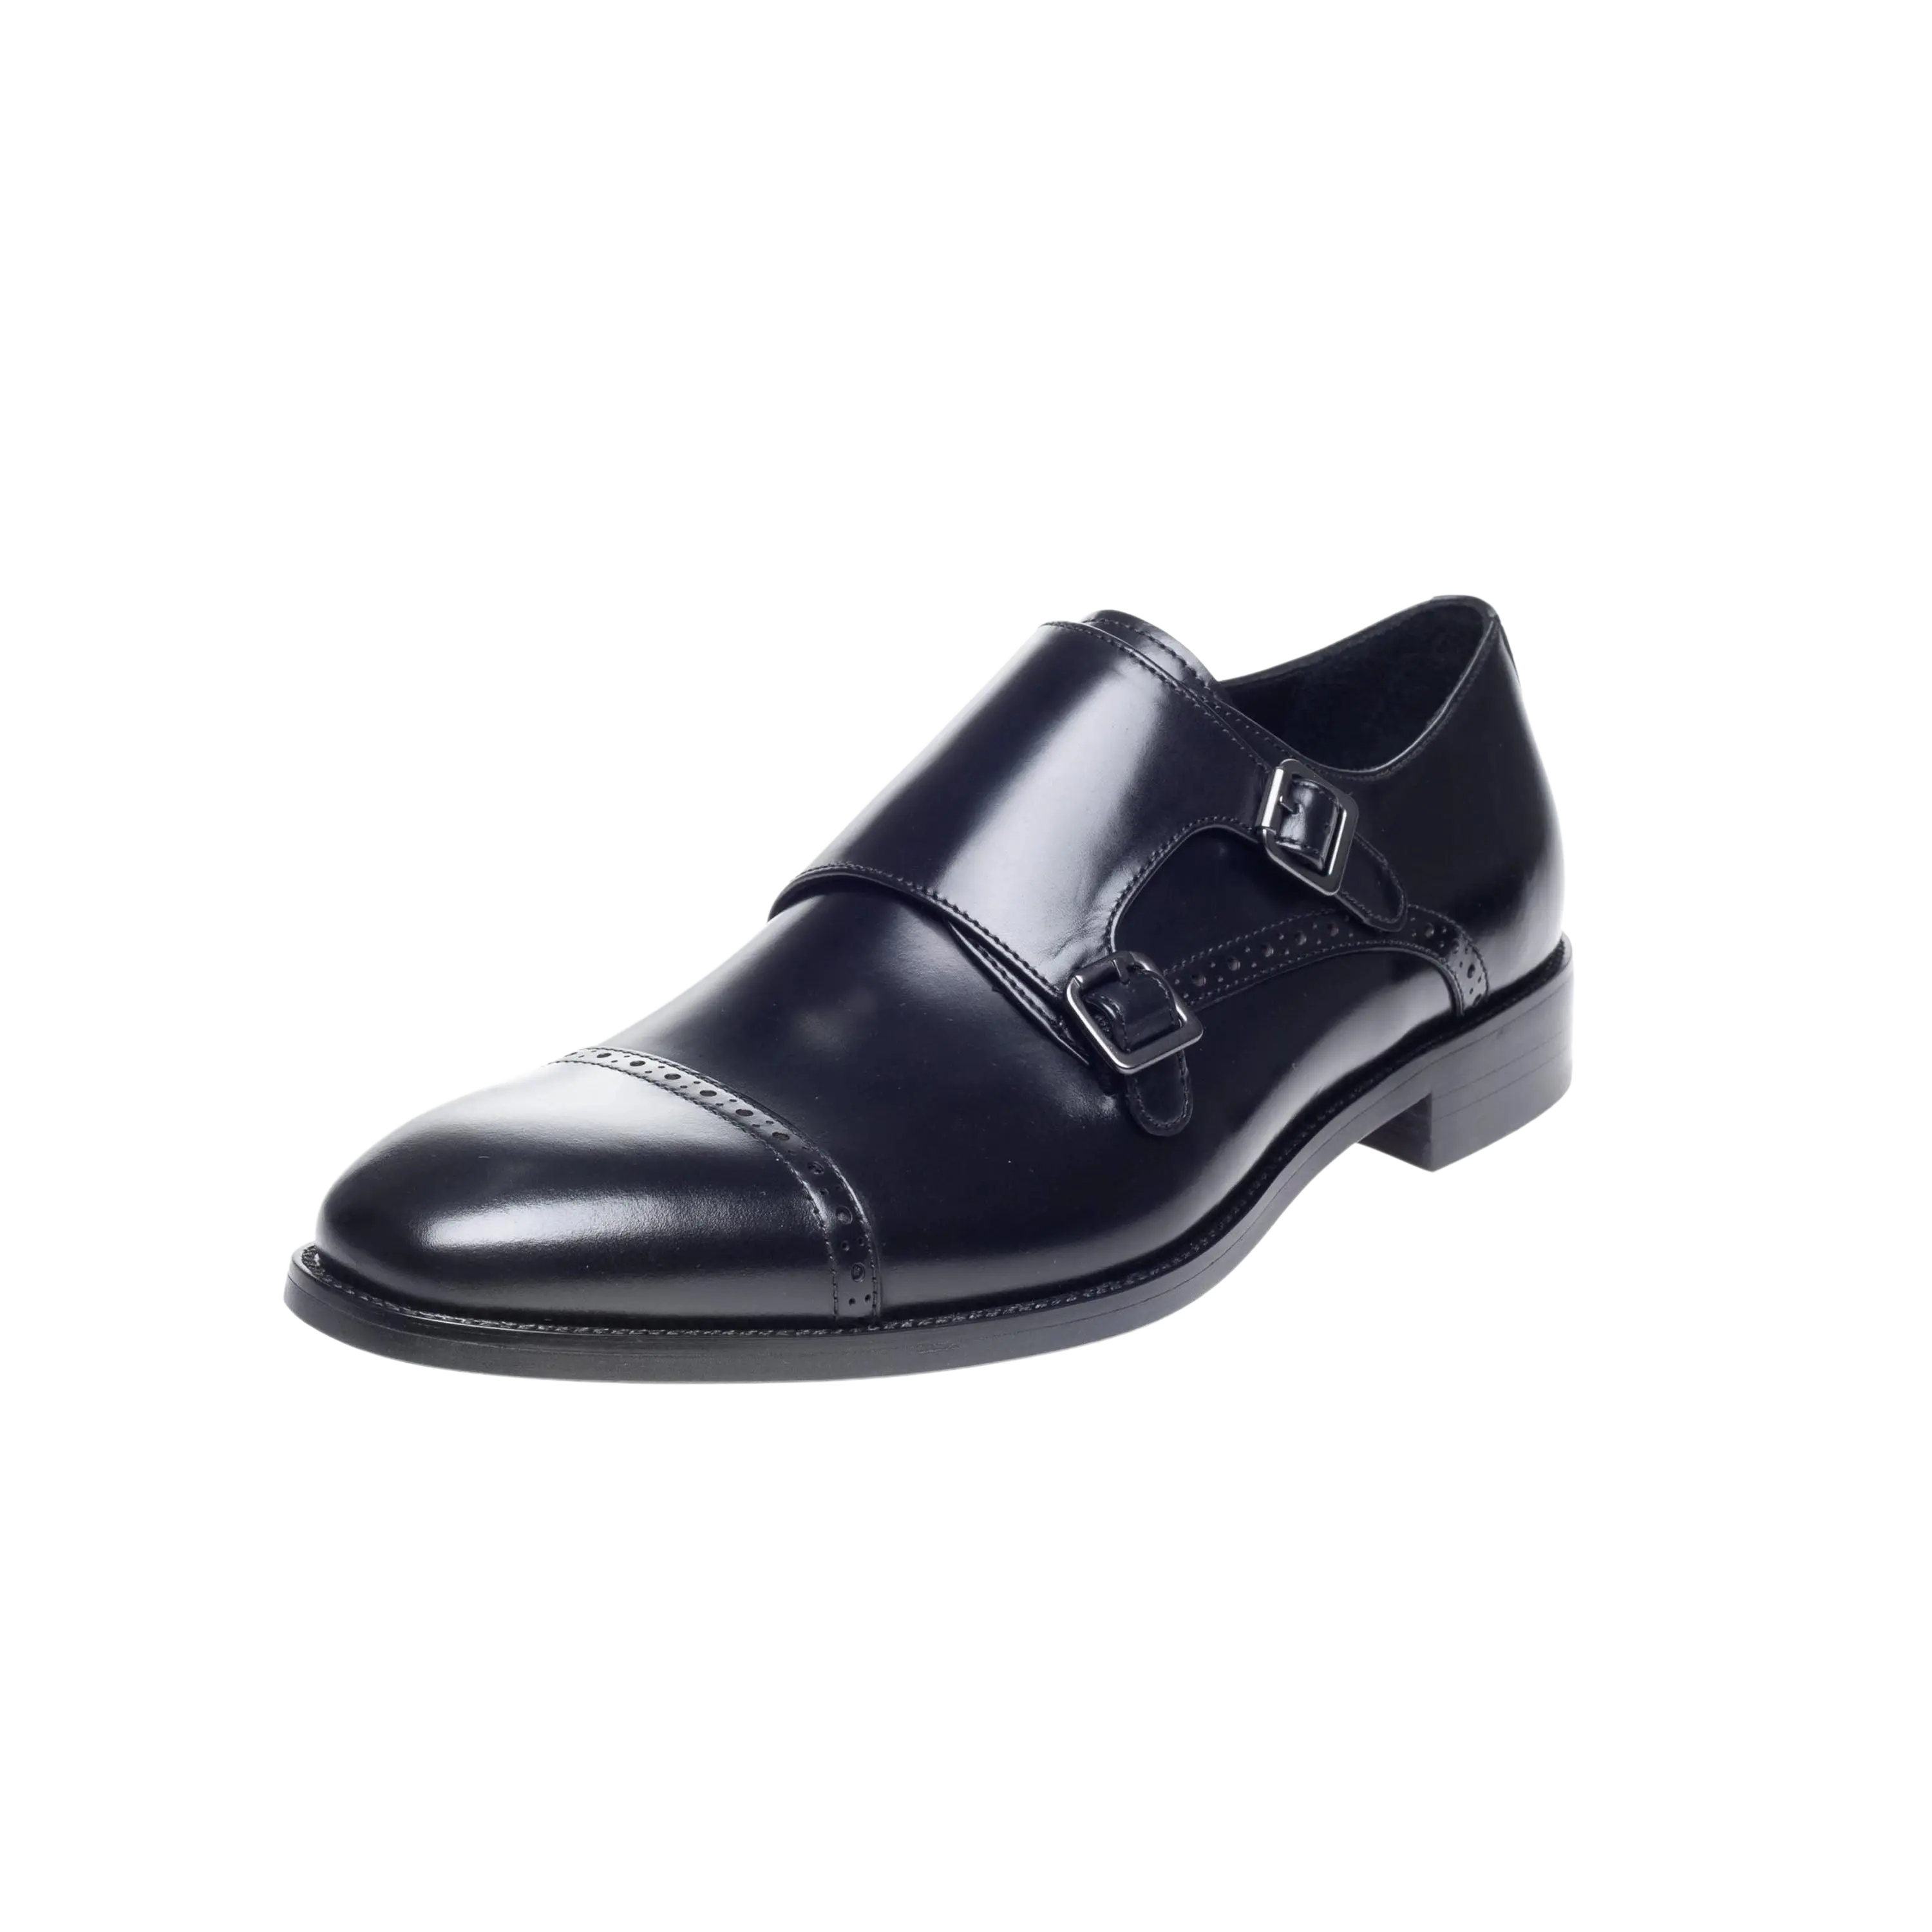 John White Alderney Shoe Double Monk Oxford Shoes for Men